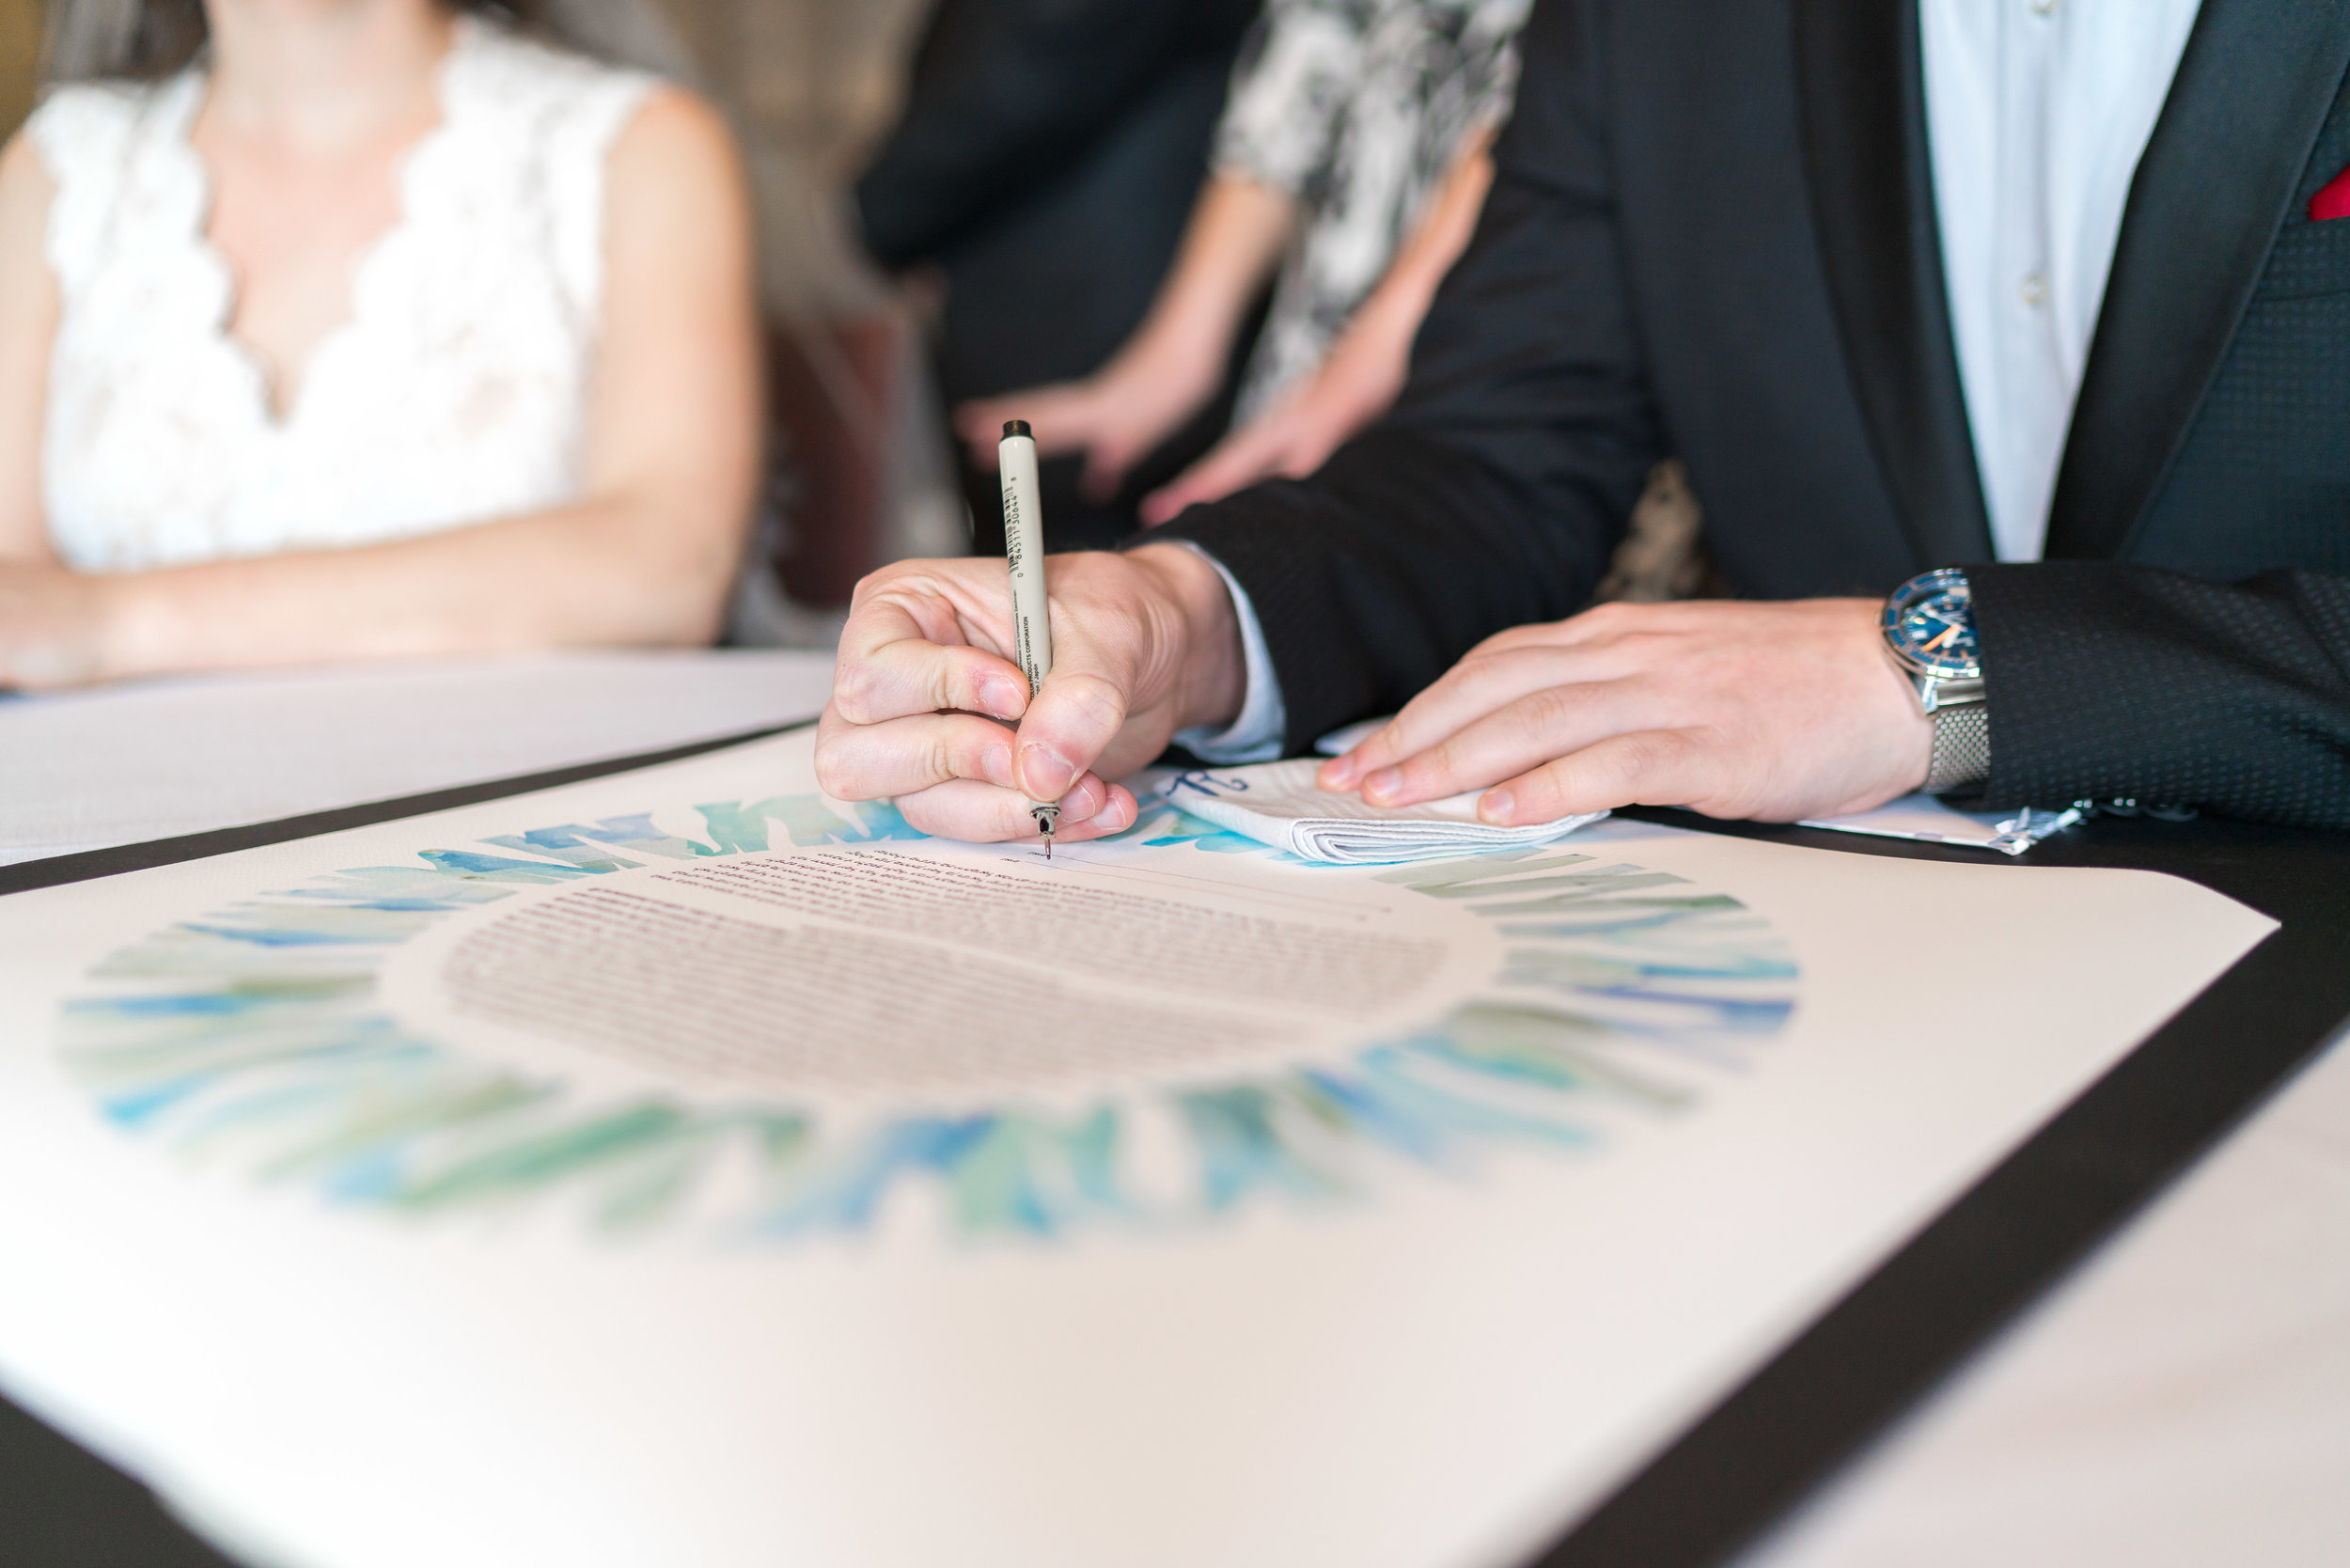 Ketubah signing at Maryland Jewish wedding